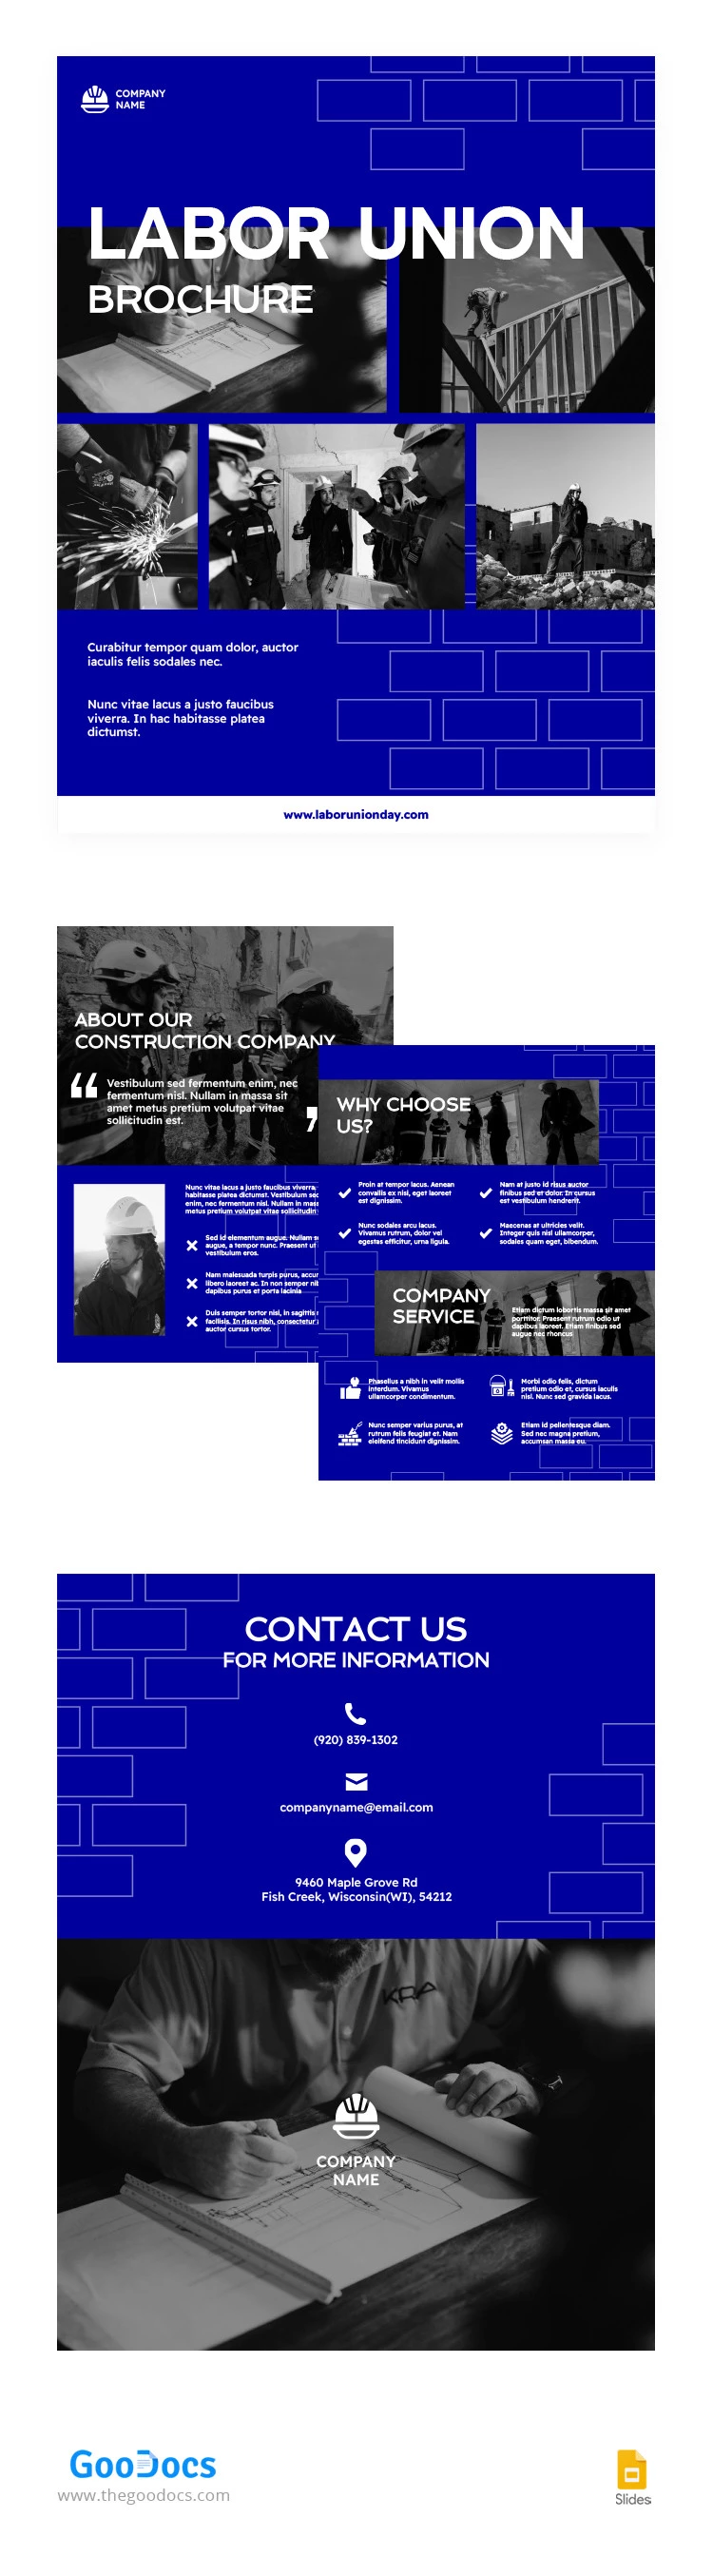 Brochure du Syndicat du Travail Bleu - free Google Docs Template - 10066224